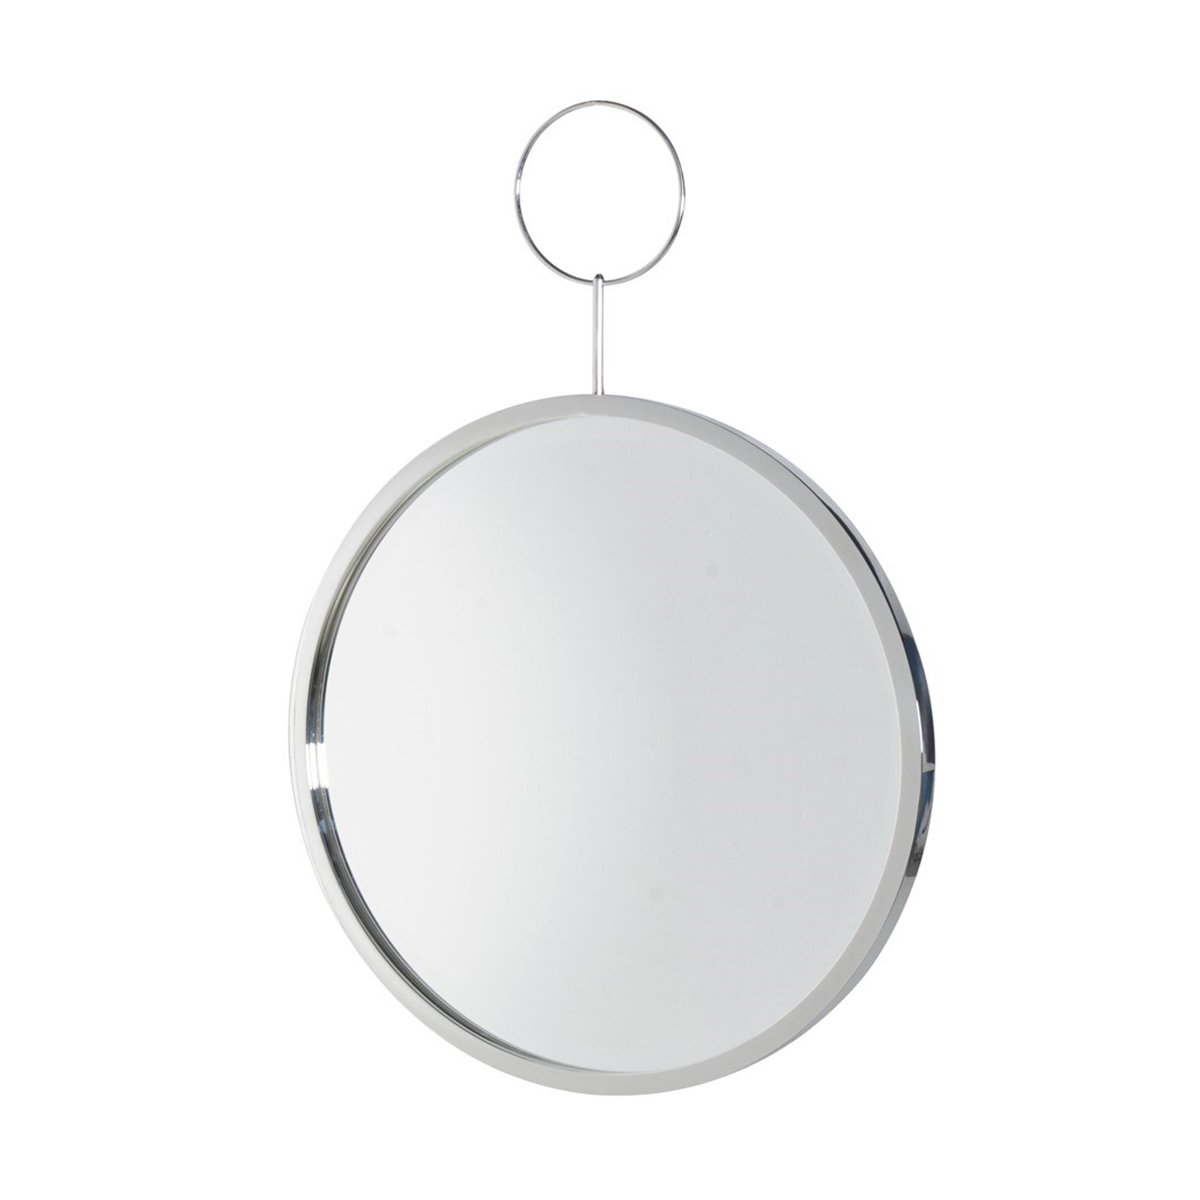 Silver Hoop Round Wall Mirror 84cm x 60cm